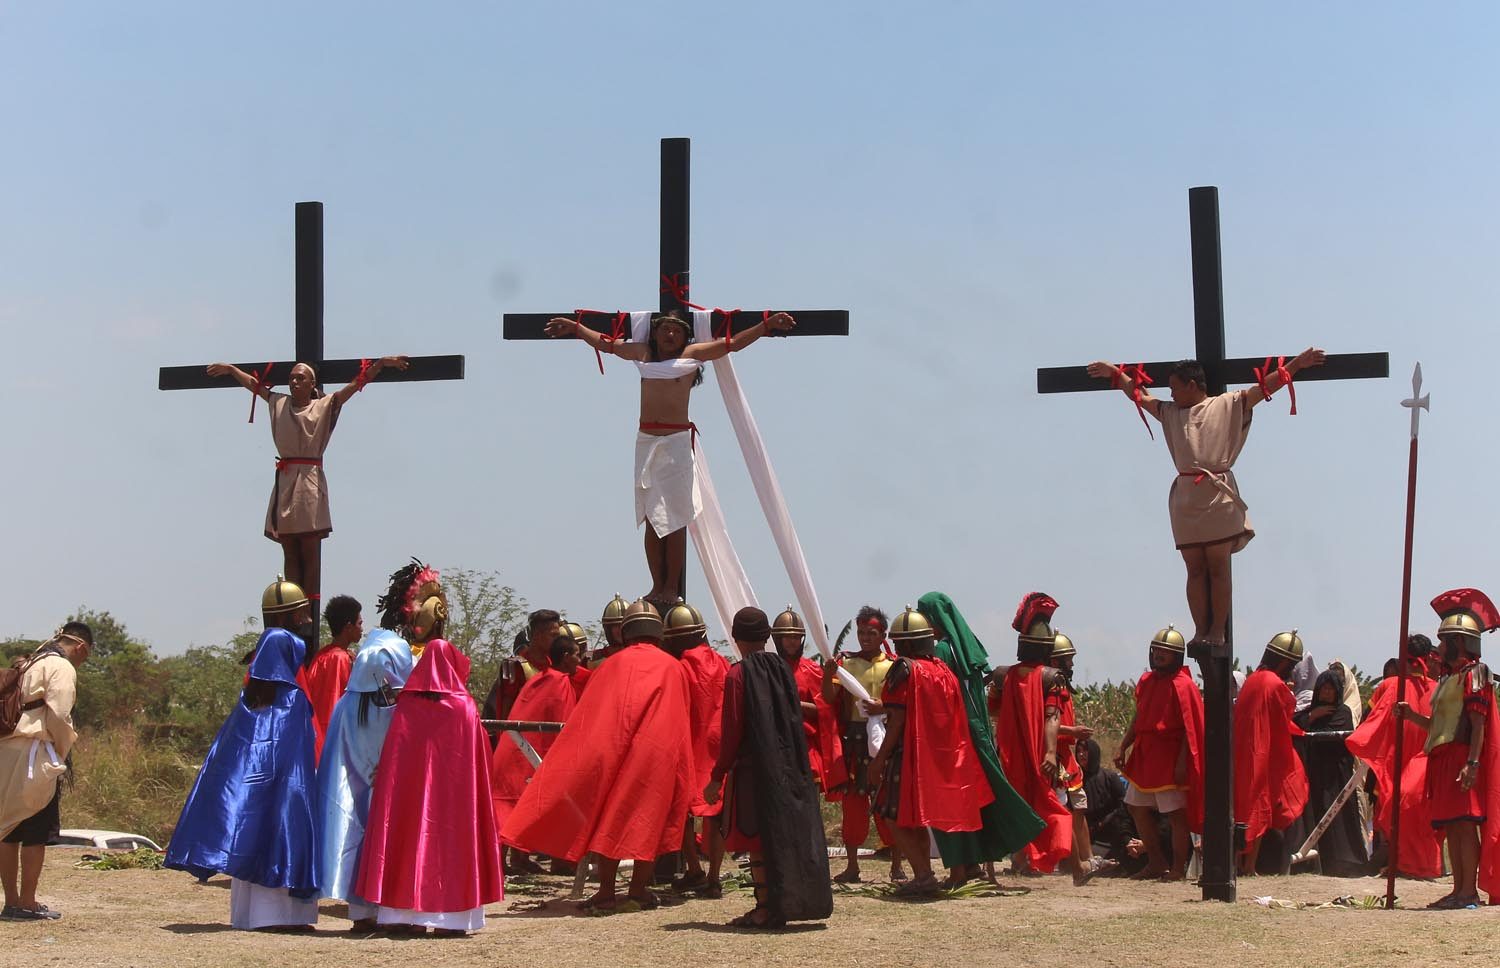 IN PHOTOS: Crucifixions in San Pedro Cutud